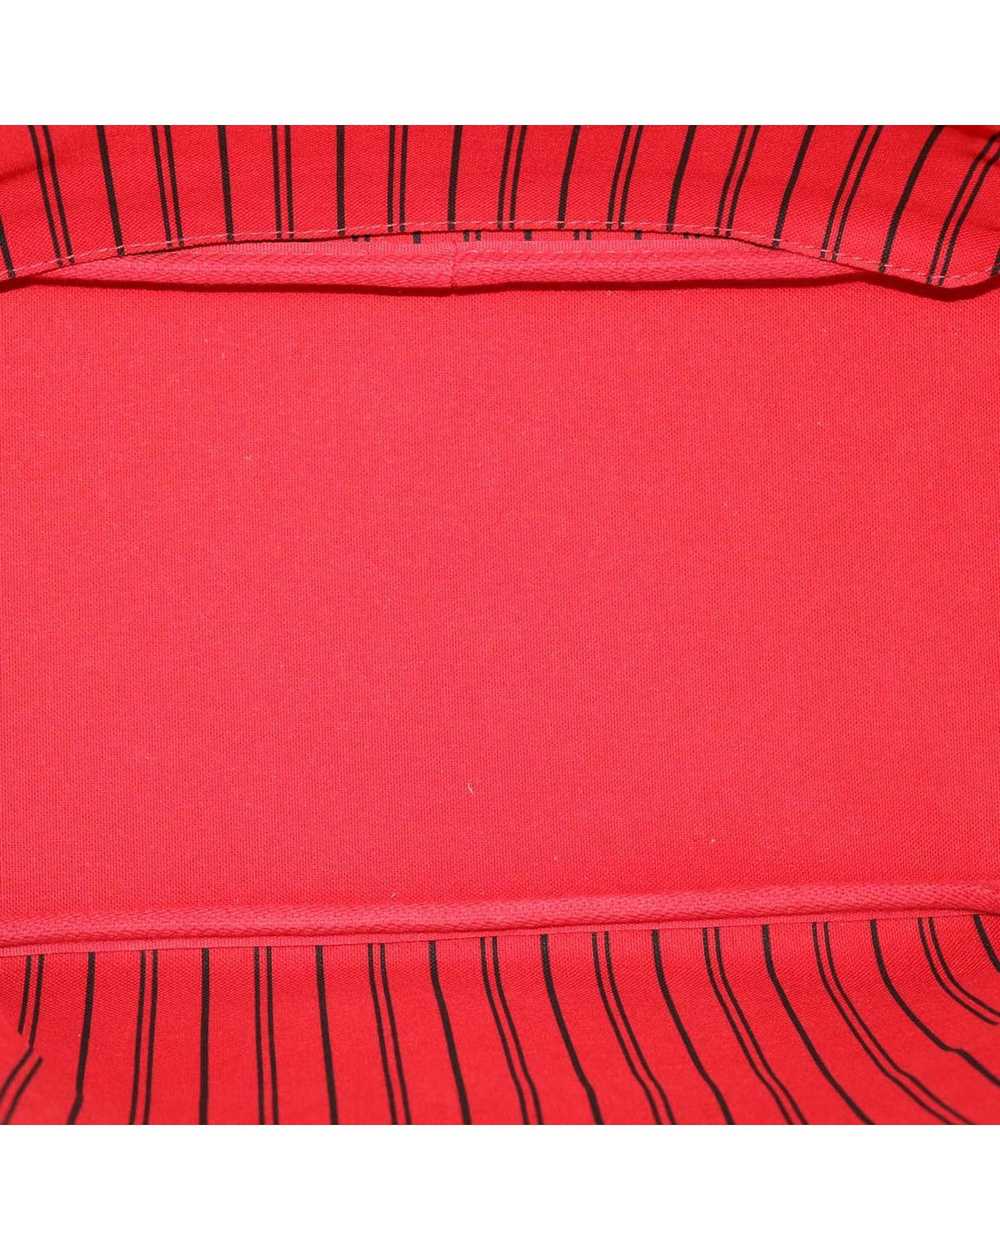 Louis Vuitton Classic Damier Ebene Tote Bag - image 10